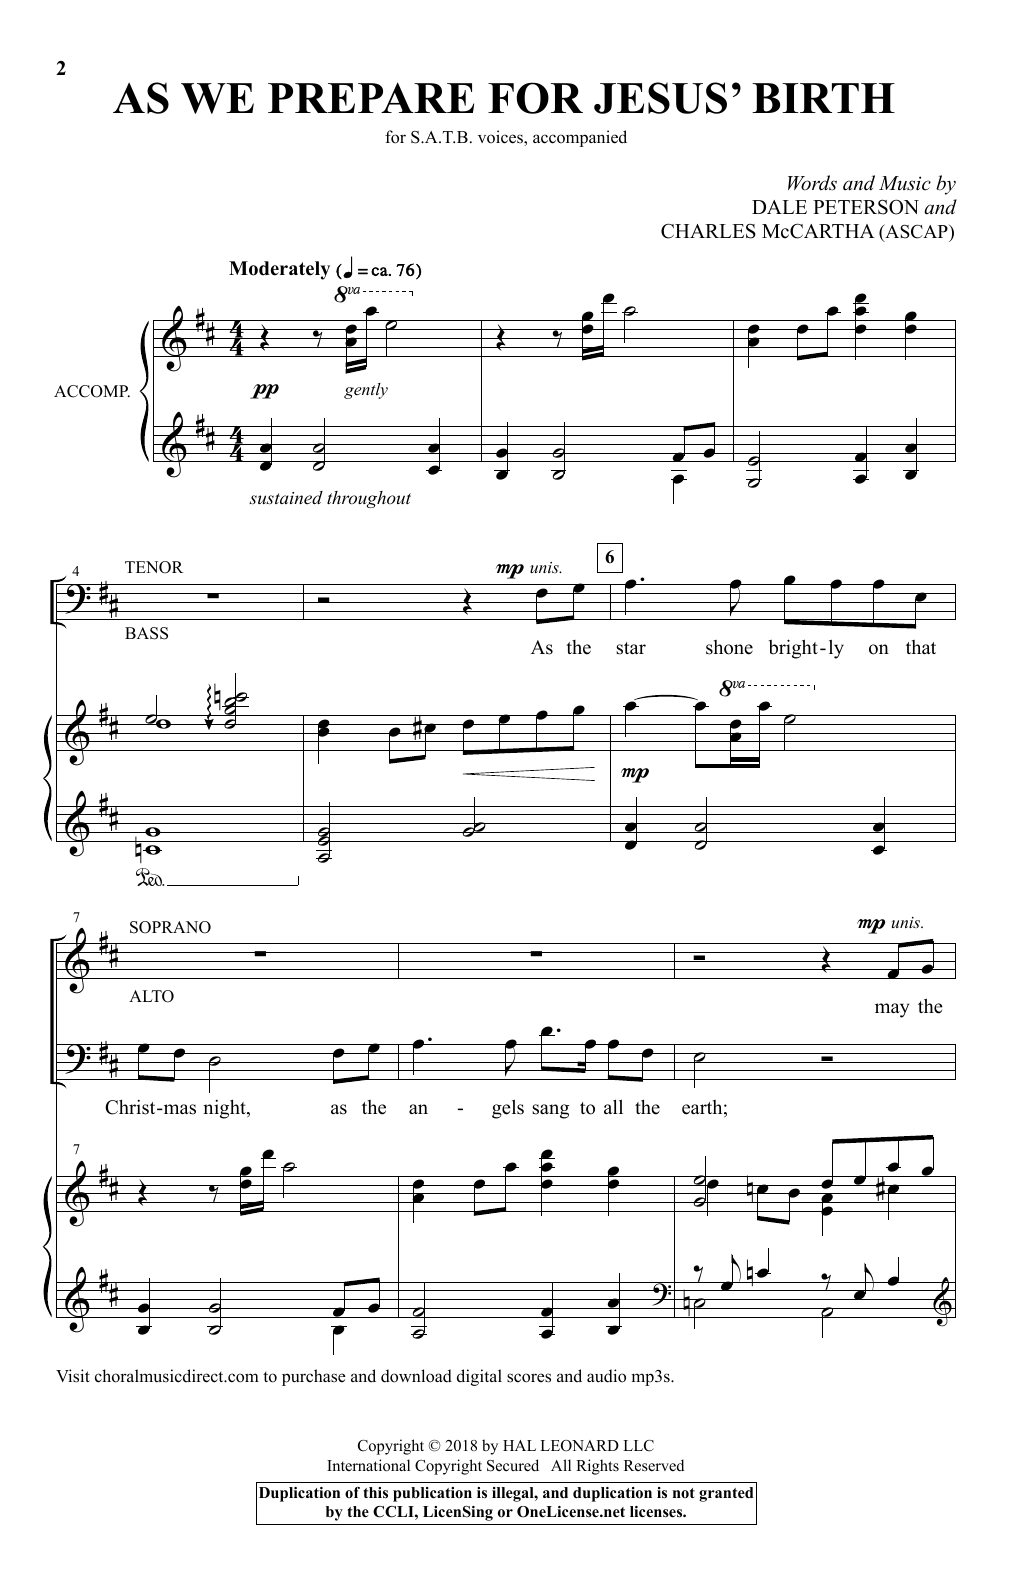 Download Charles McCartha As We Prepare For Jesus' Birth Sheet Music